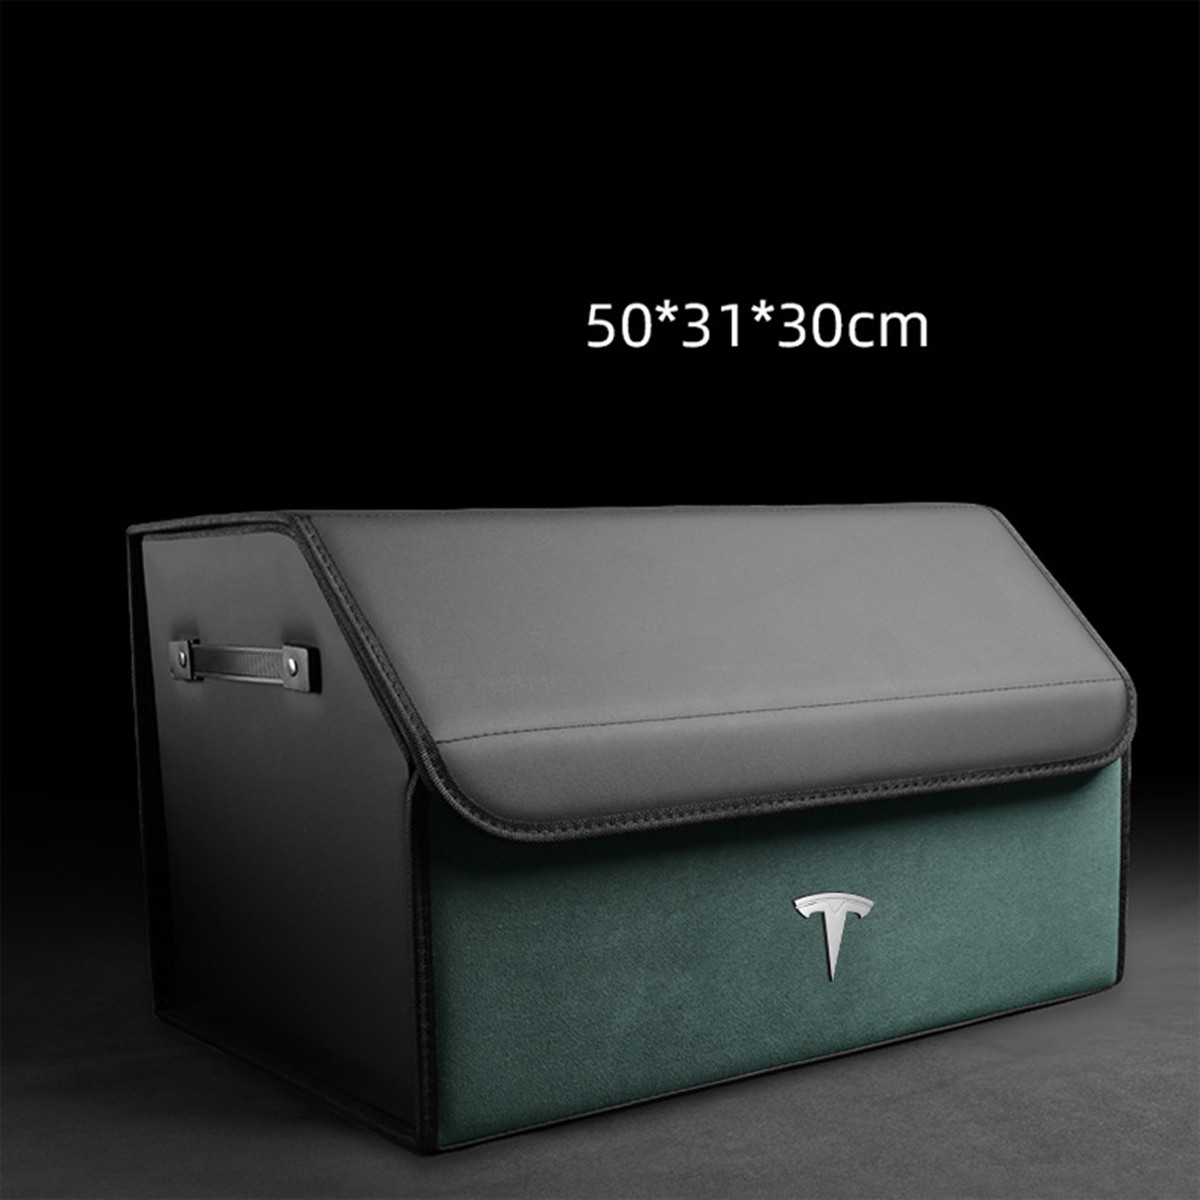 Original Car Trunk Left and Right Storage Box for Tesla Model 3 Highland